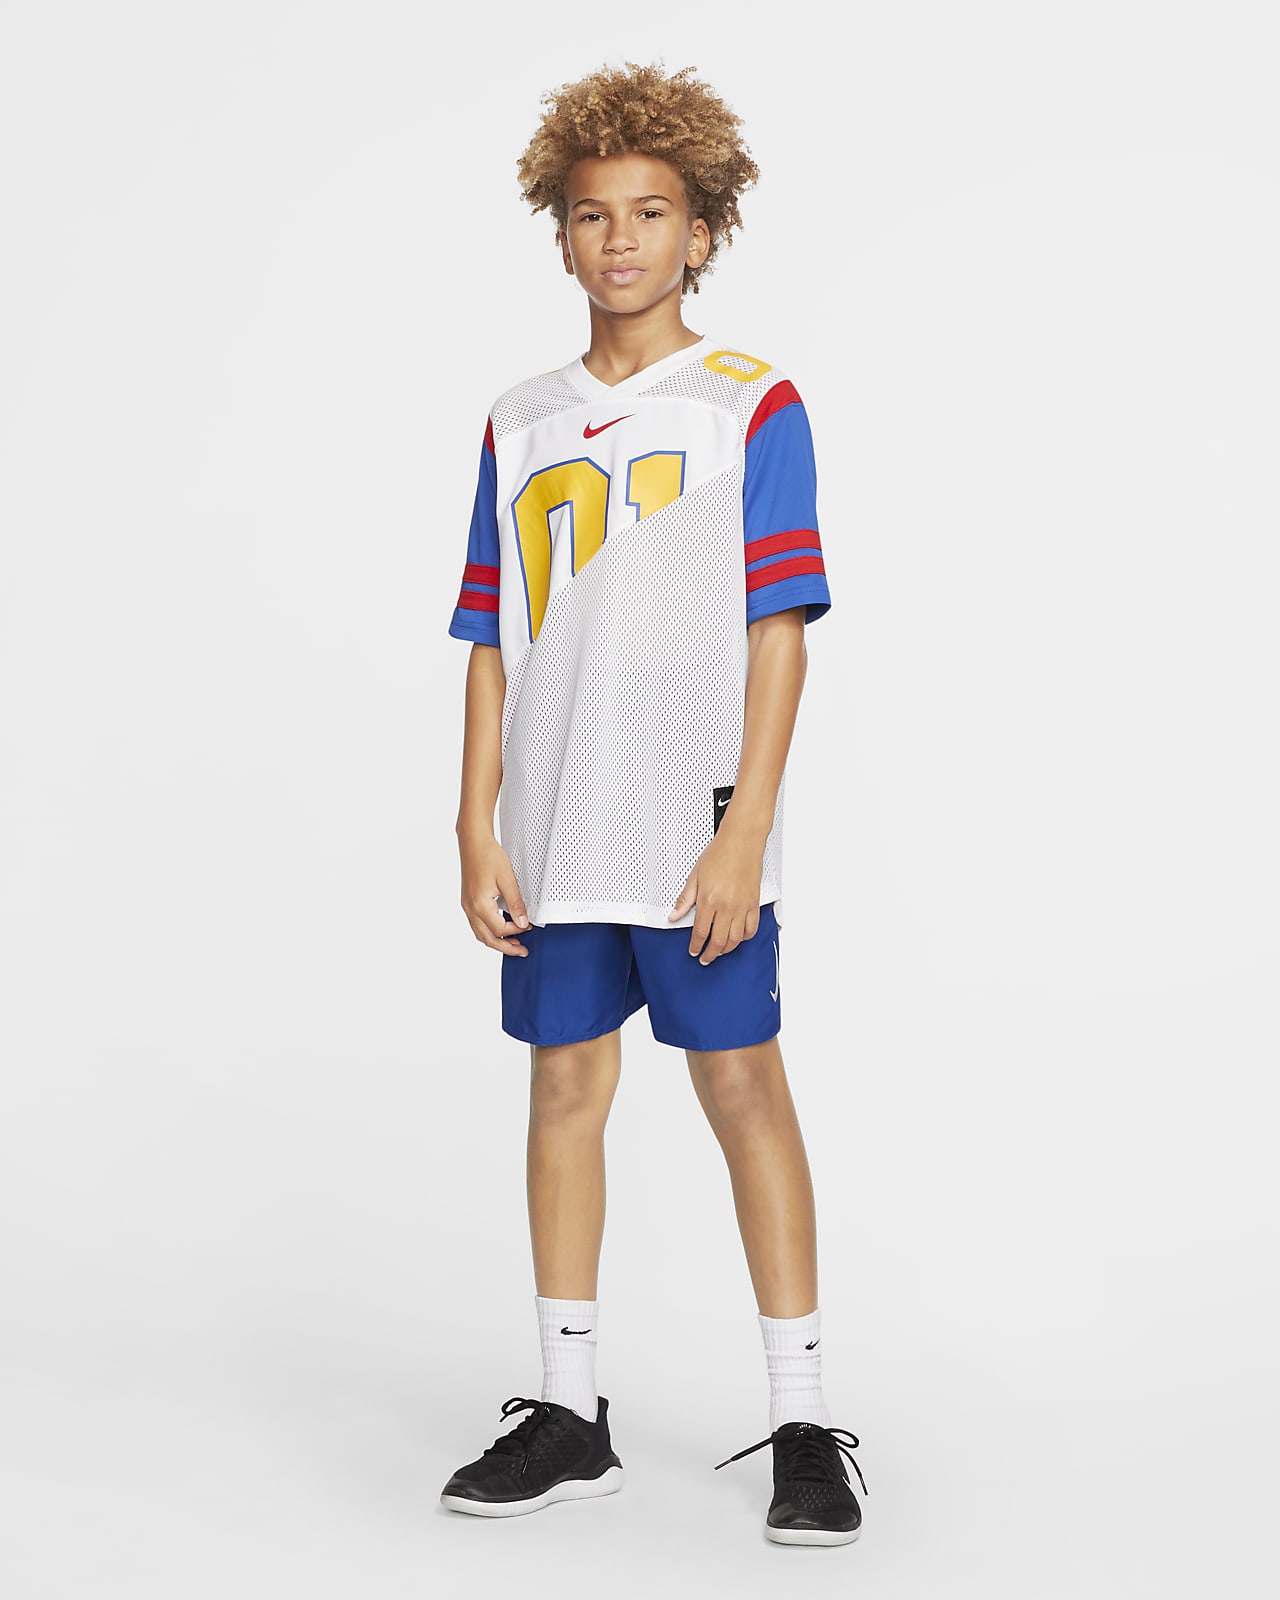 Nike Big Kids' Jersey. Nike.com